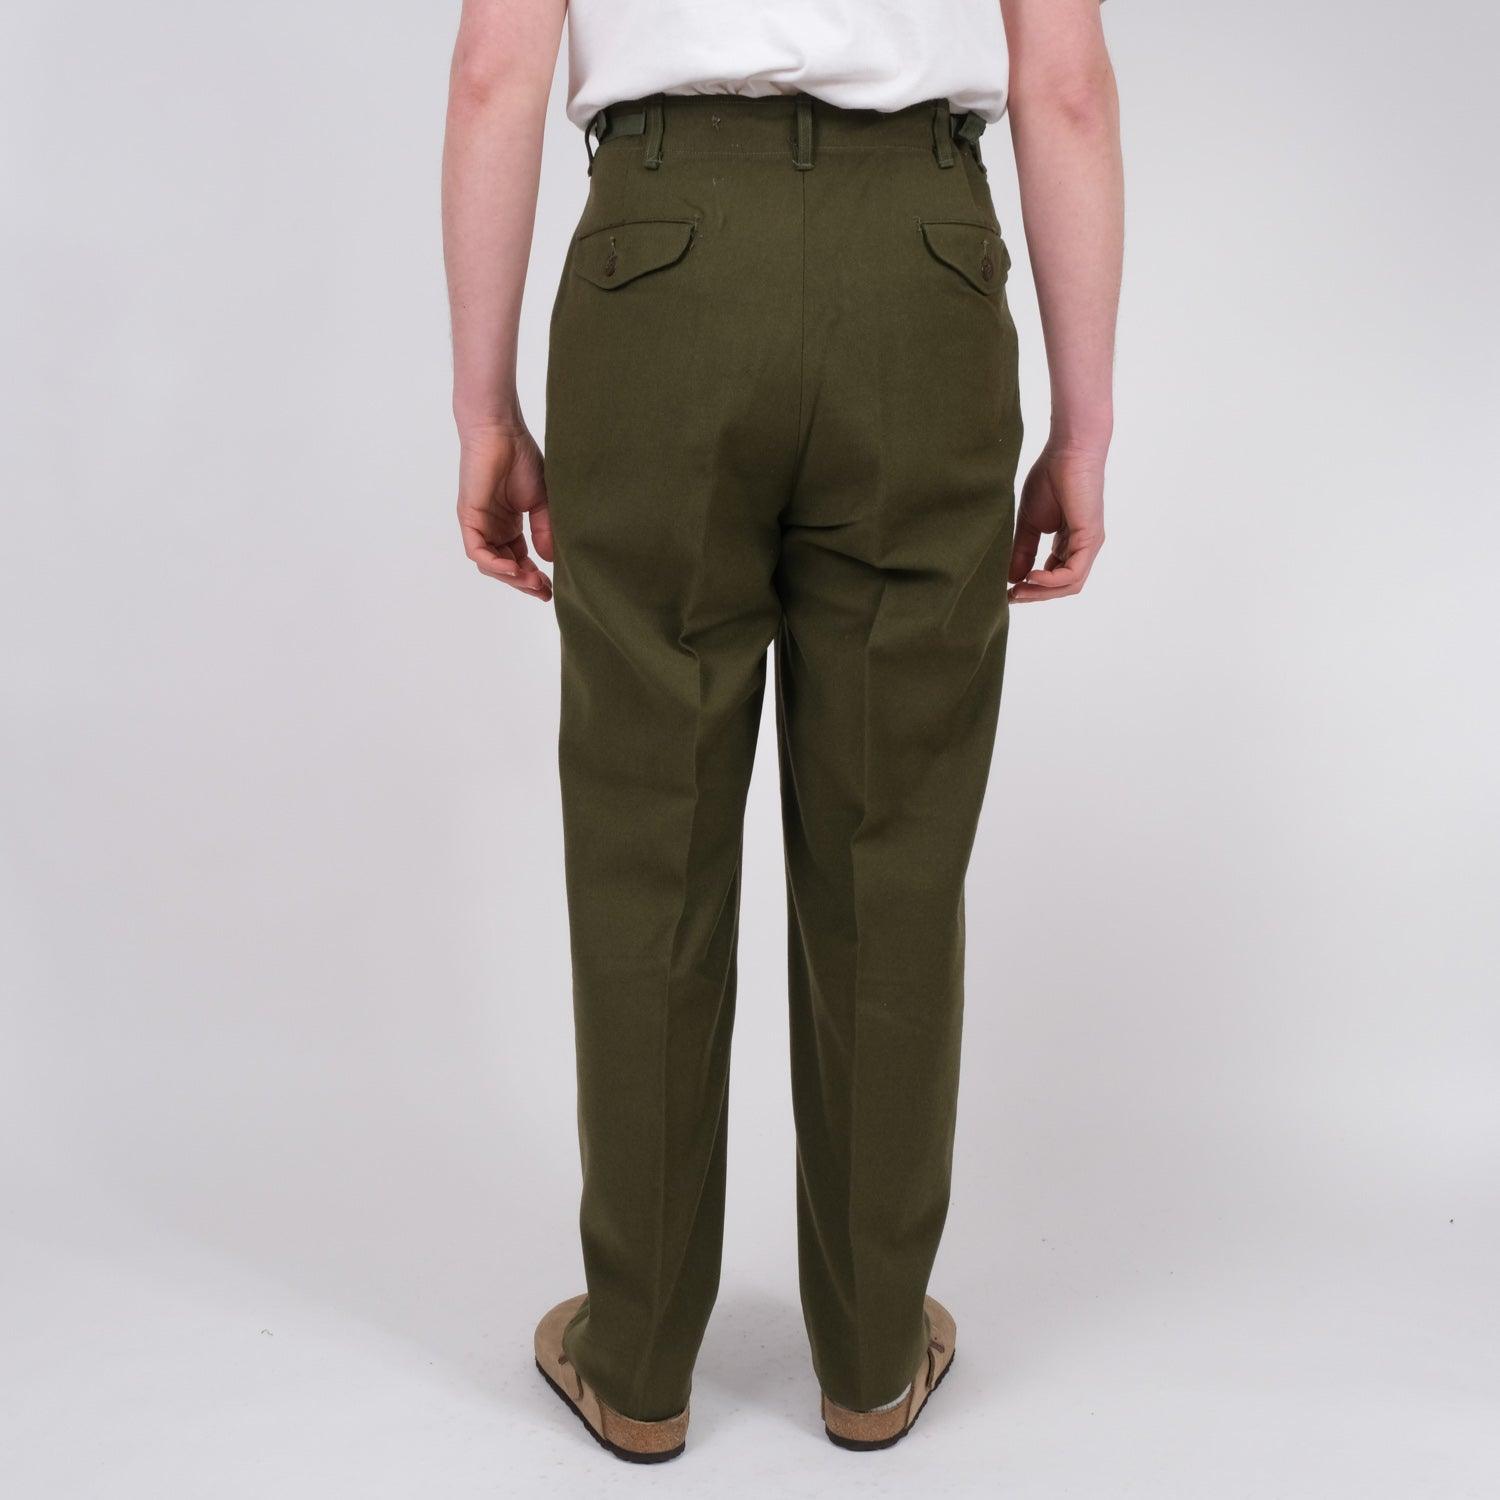 Military Supply House - Swedish Wool Pants - Military Combat Pants